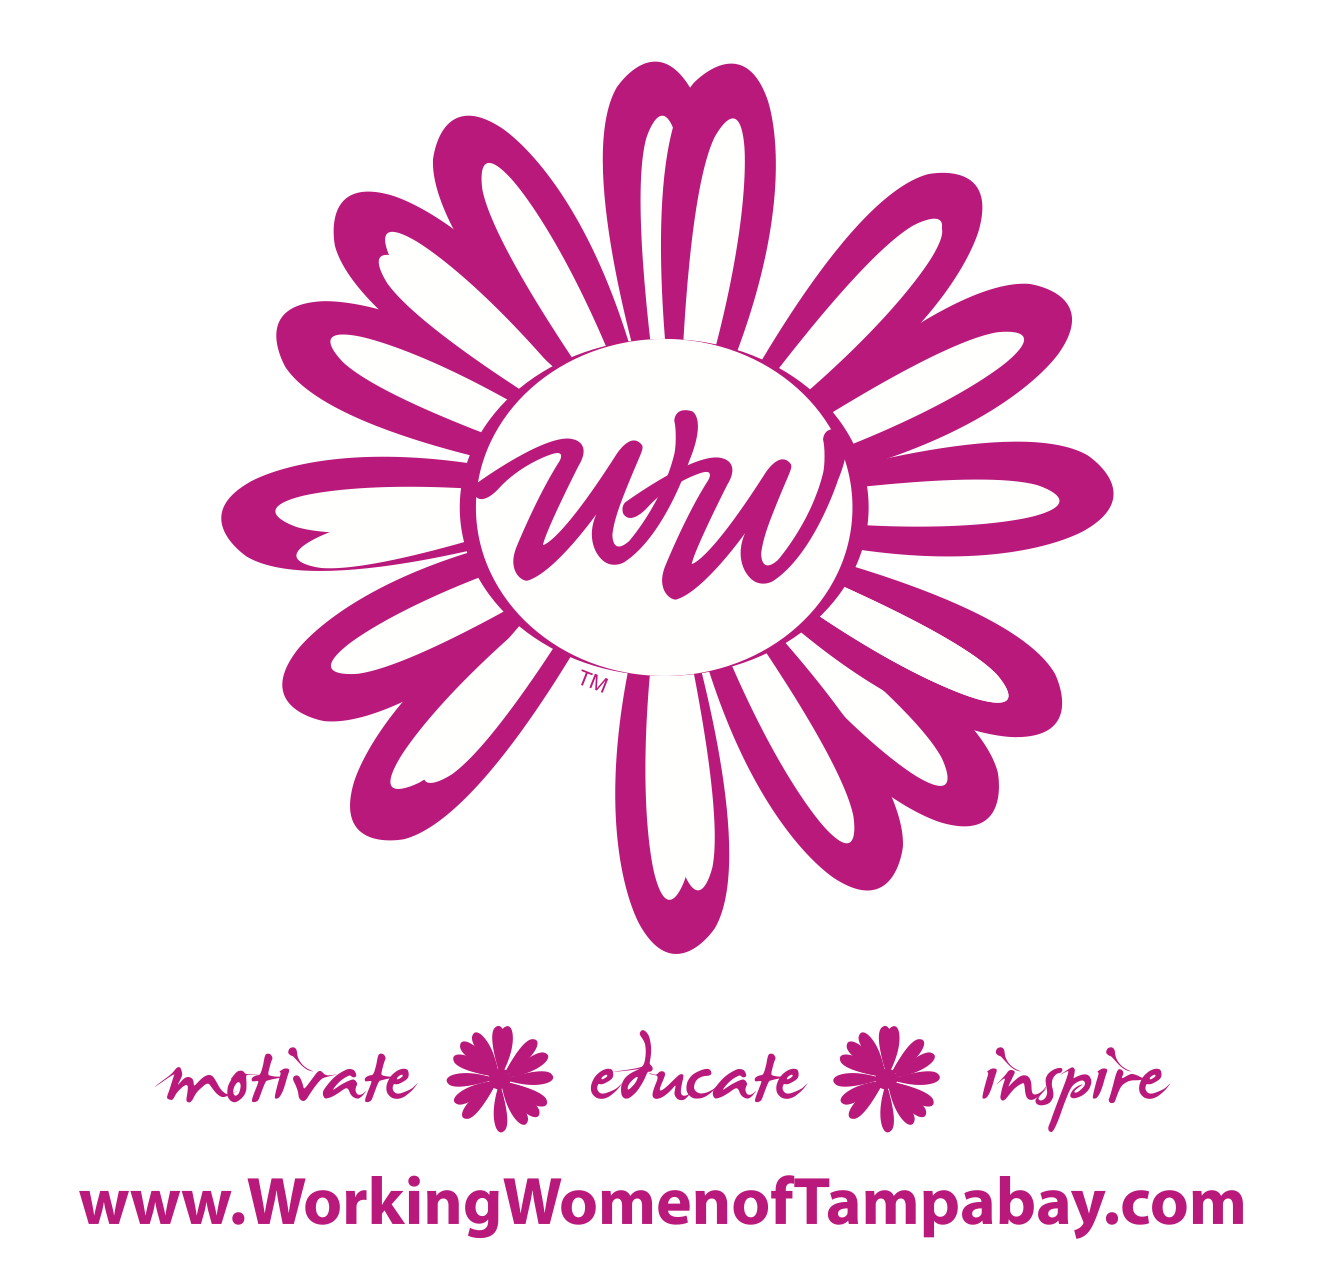 Working Women of Tampa Bay